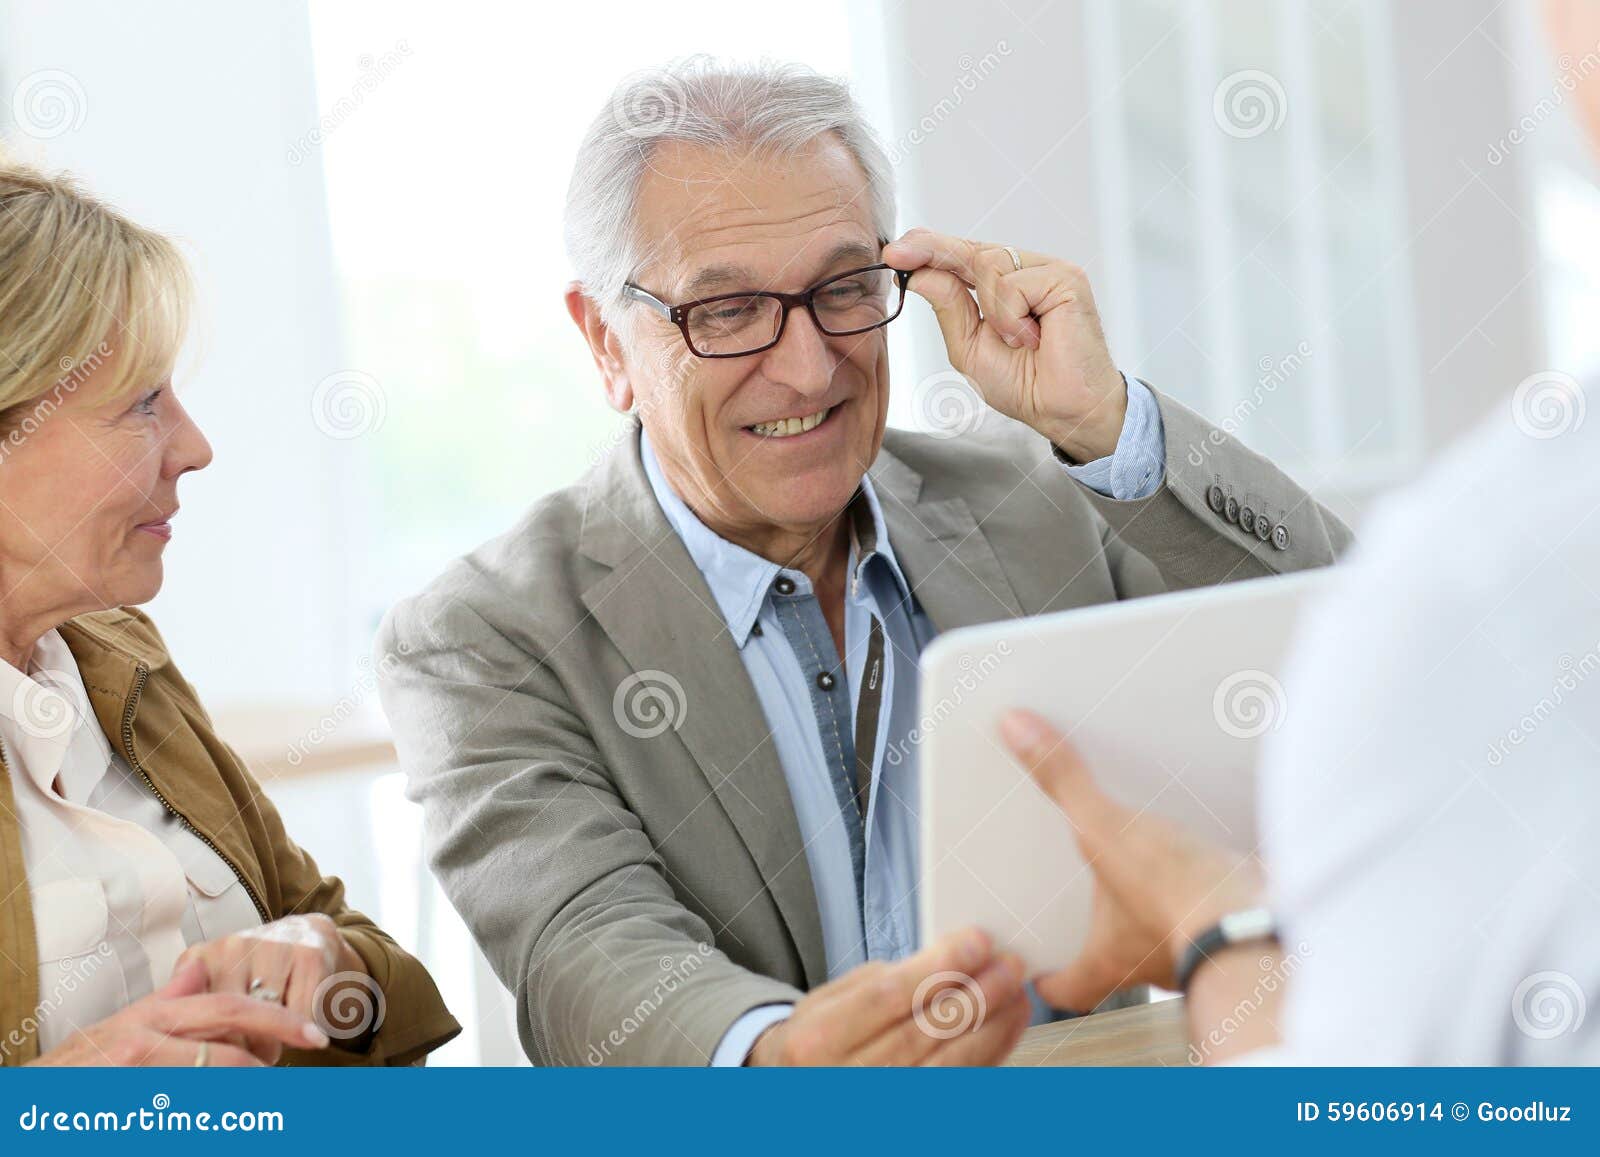 senior man trying on eyeglasses in optical store